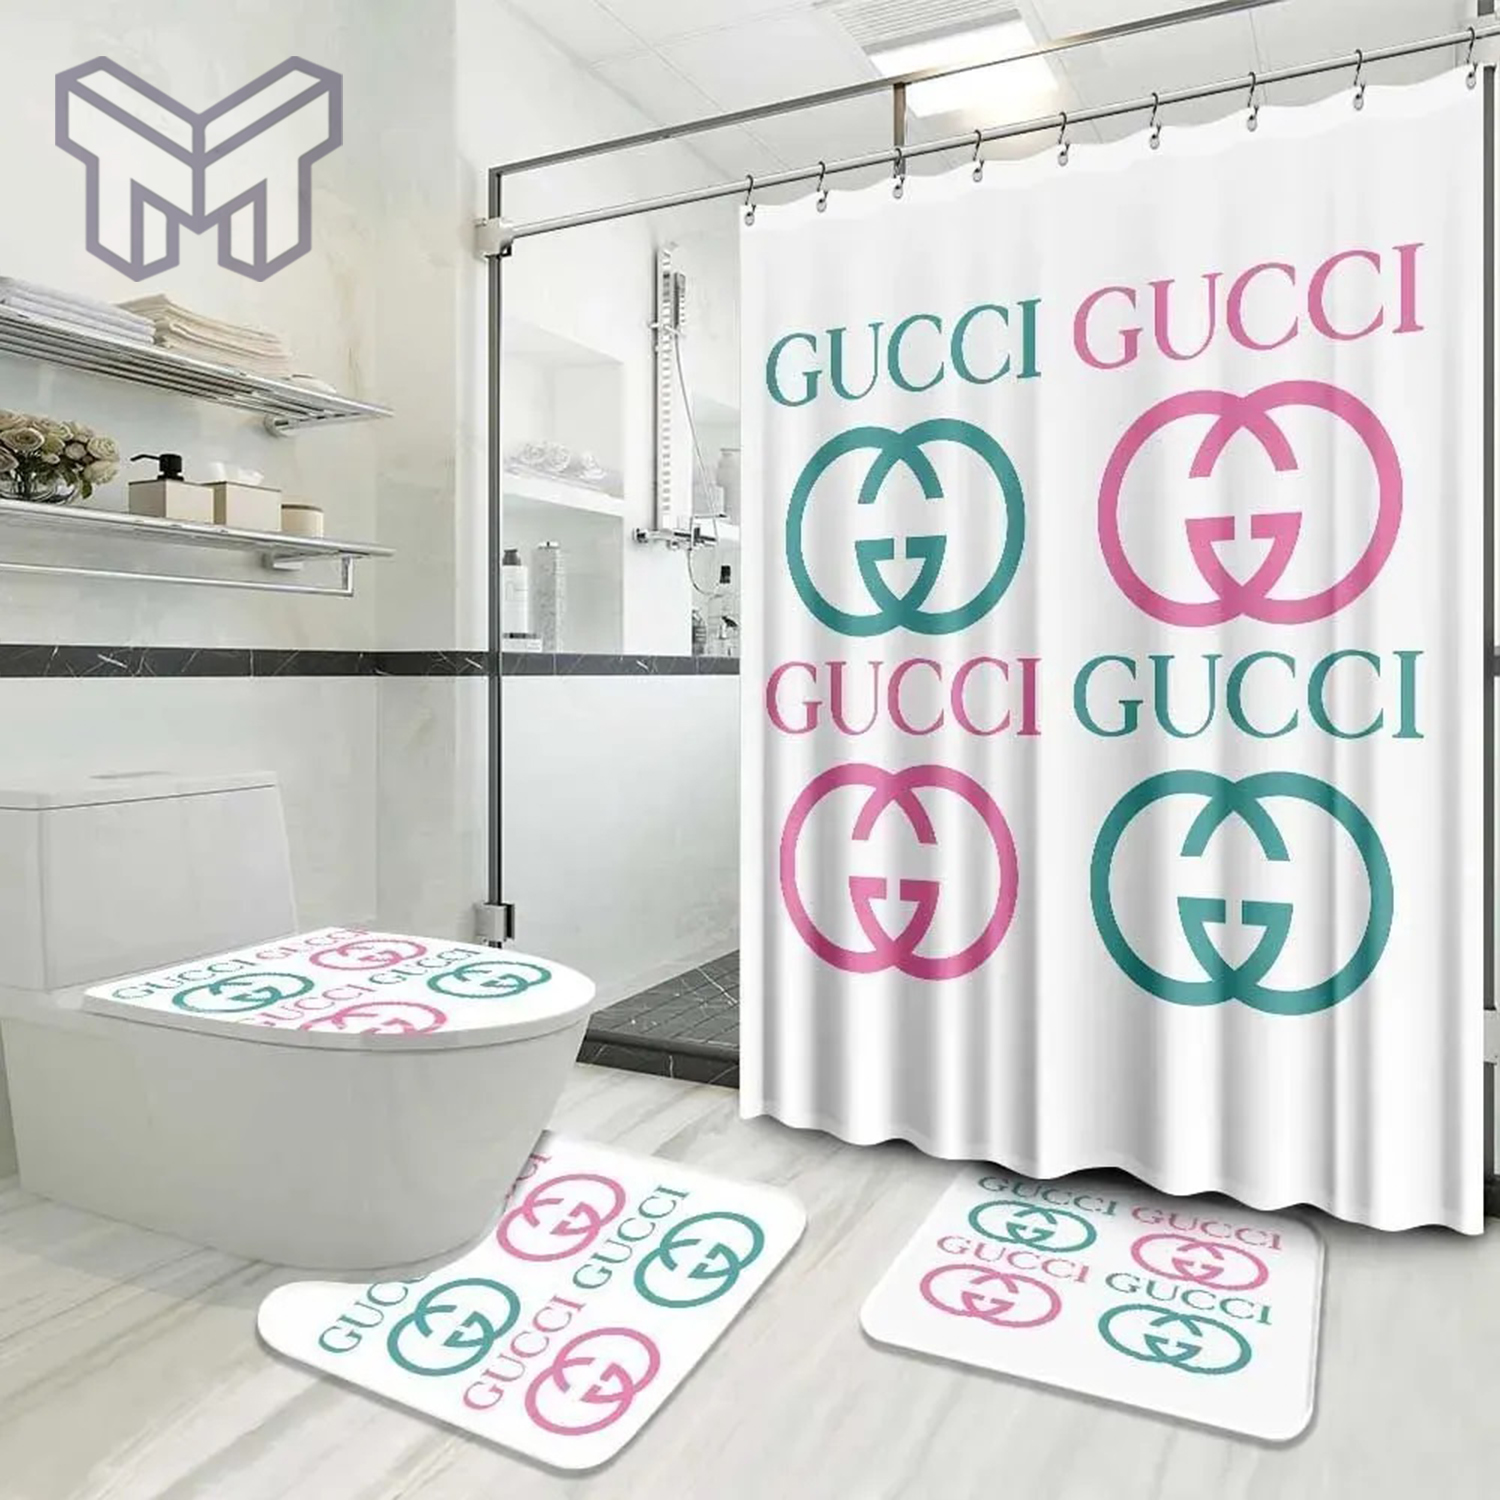 Gucci bathroom set